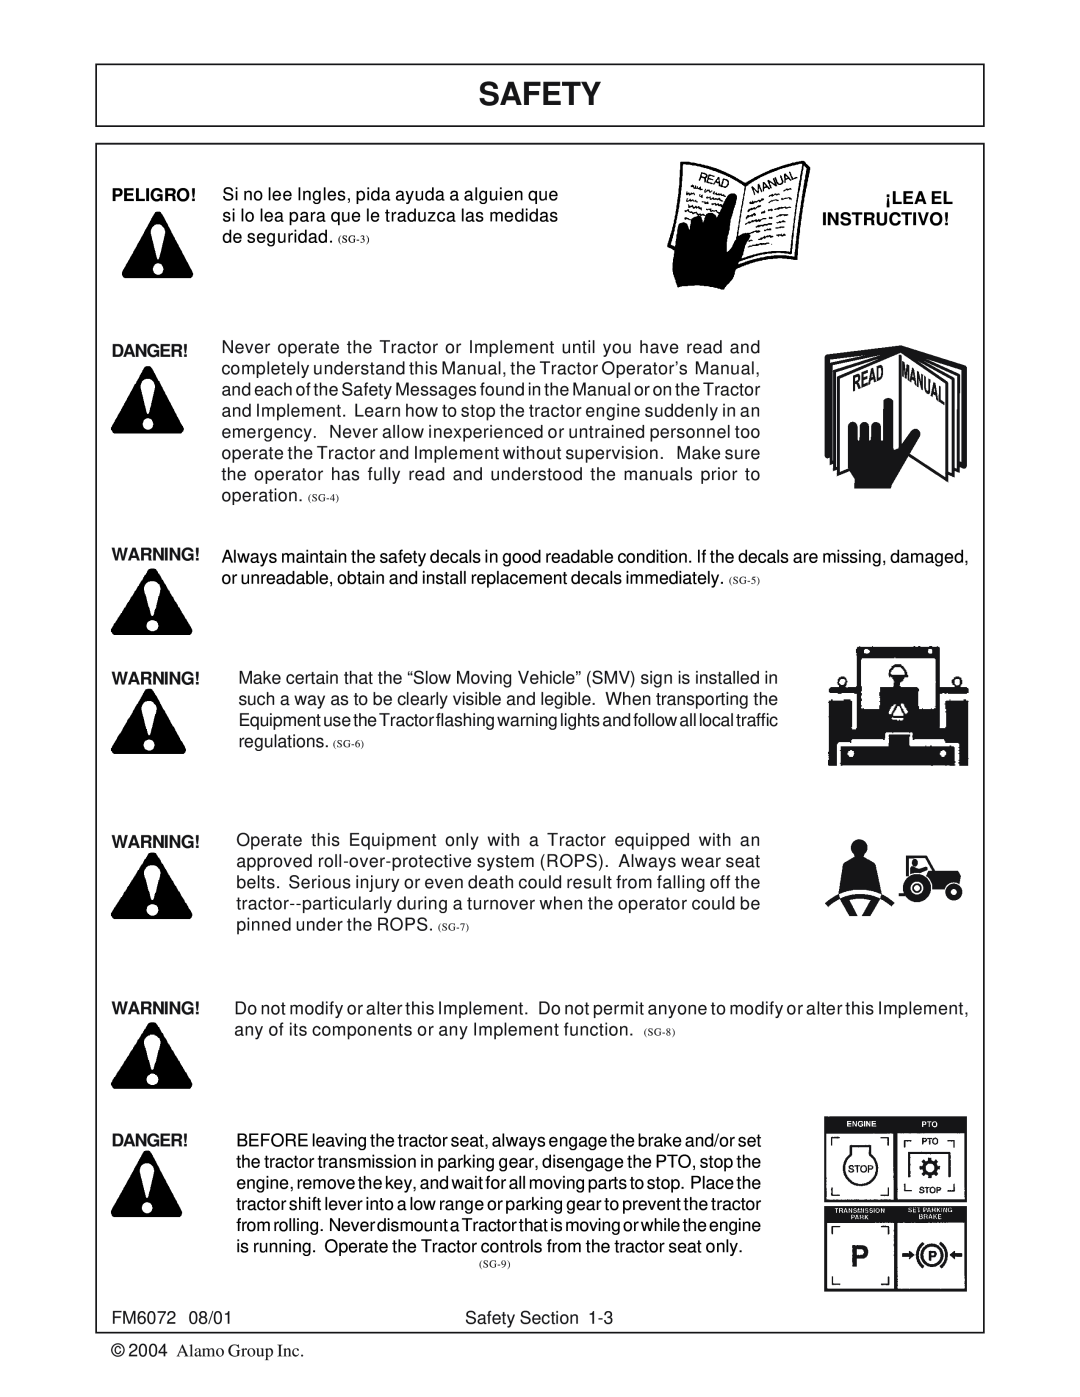 Servis-Rhino FM60/72 manual Safety, Peligro Danger, ¡Lea El Instructivo, SG-9 